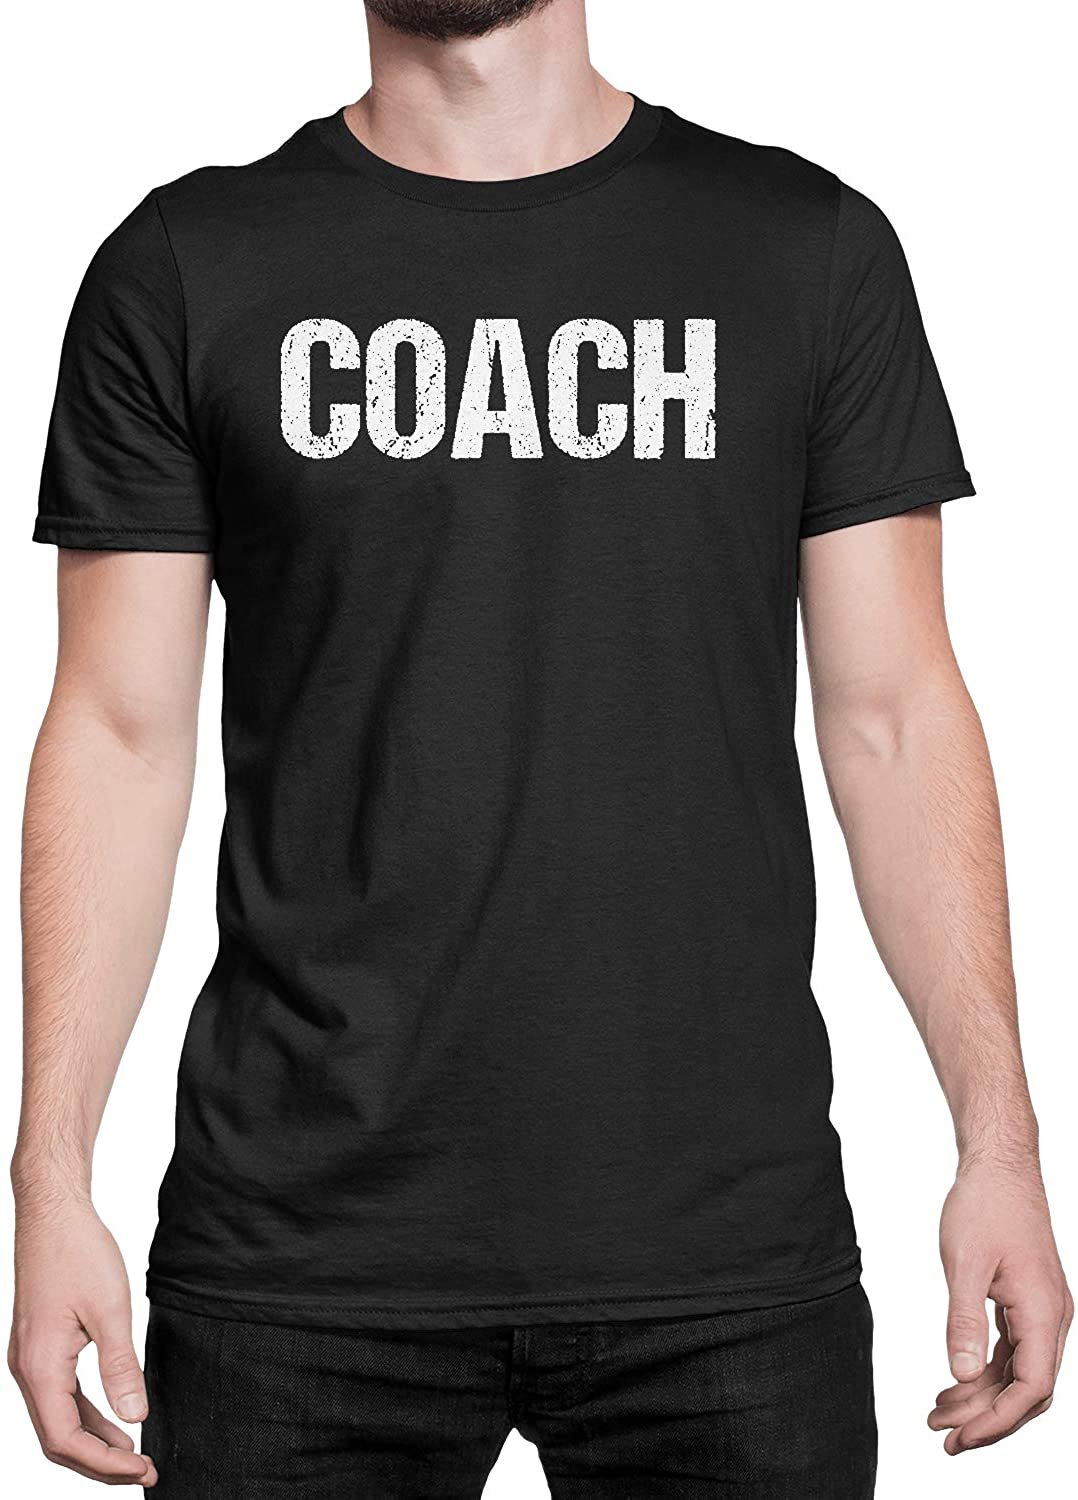 Coach T-Shirt Sports Coaching Tee Shirt (Black & White, Distressed)